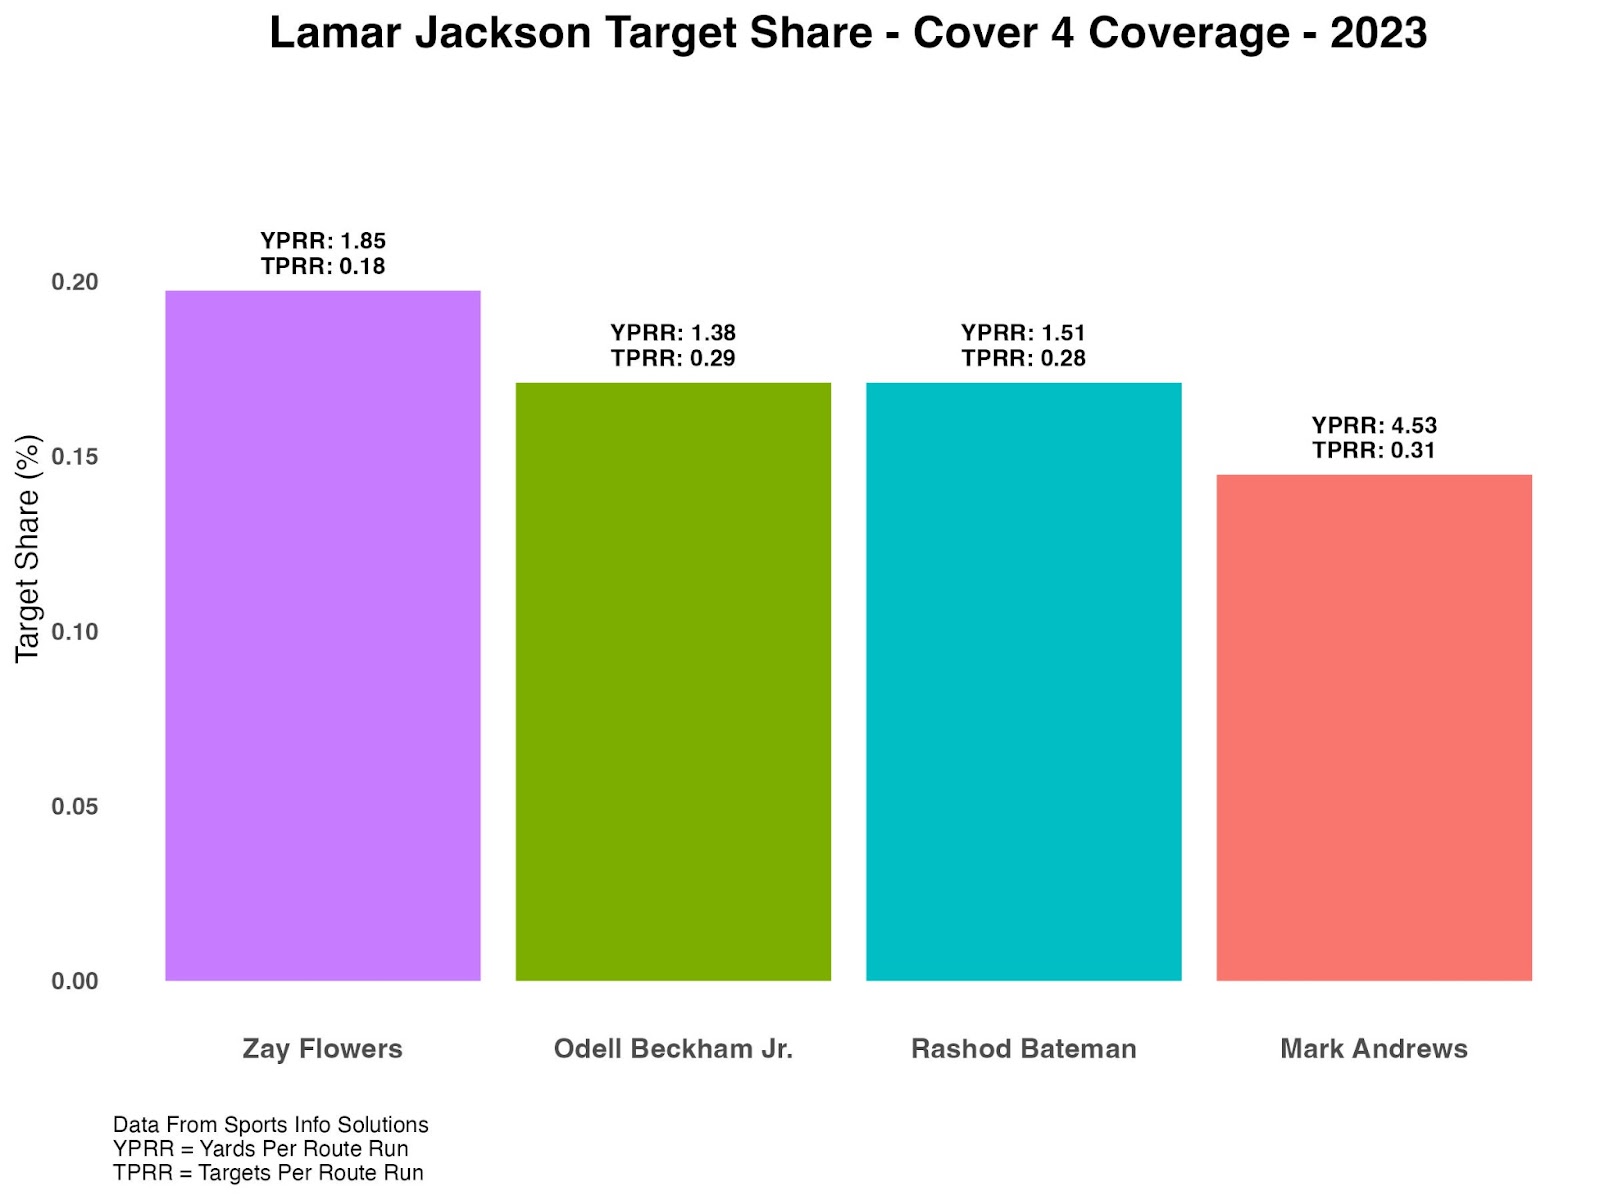 Graph that shows Lamar Jackson's target share in Cover 4 among Zay Flowers (highest), Odell Beckham Jr. (second highest), Rashod Bateman (third-highest) and Mark Andrews (fourth-highest)